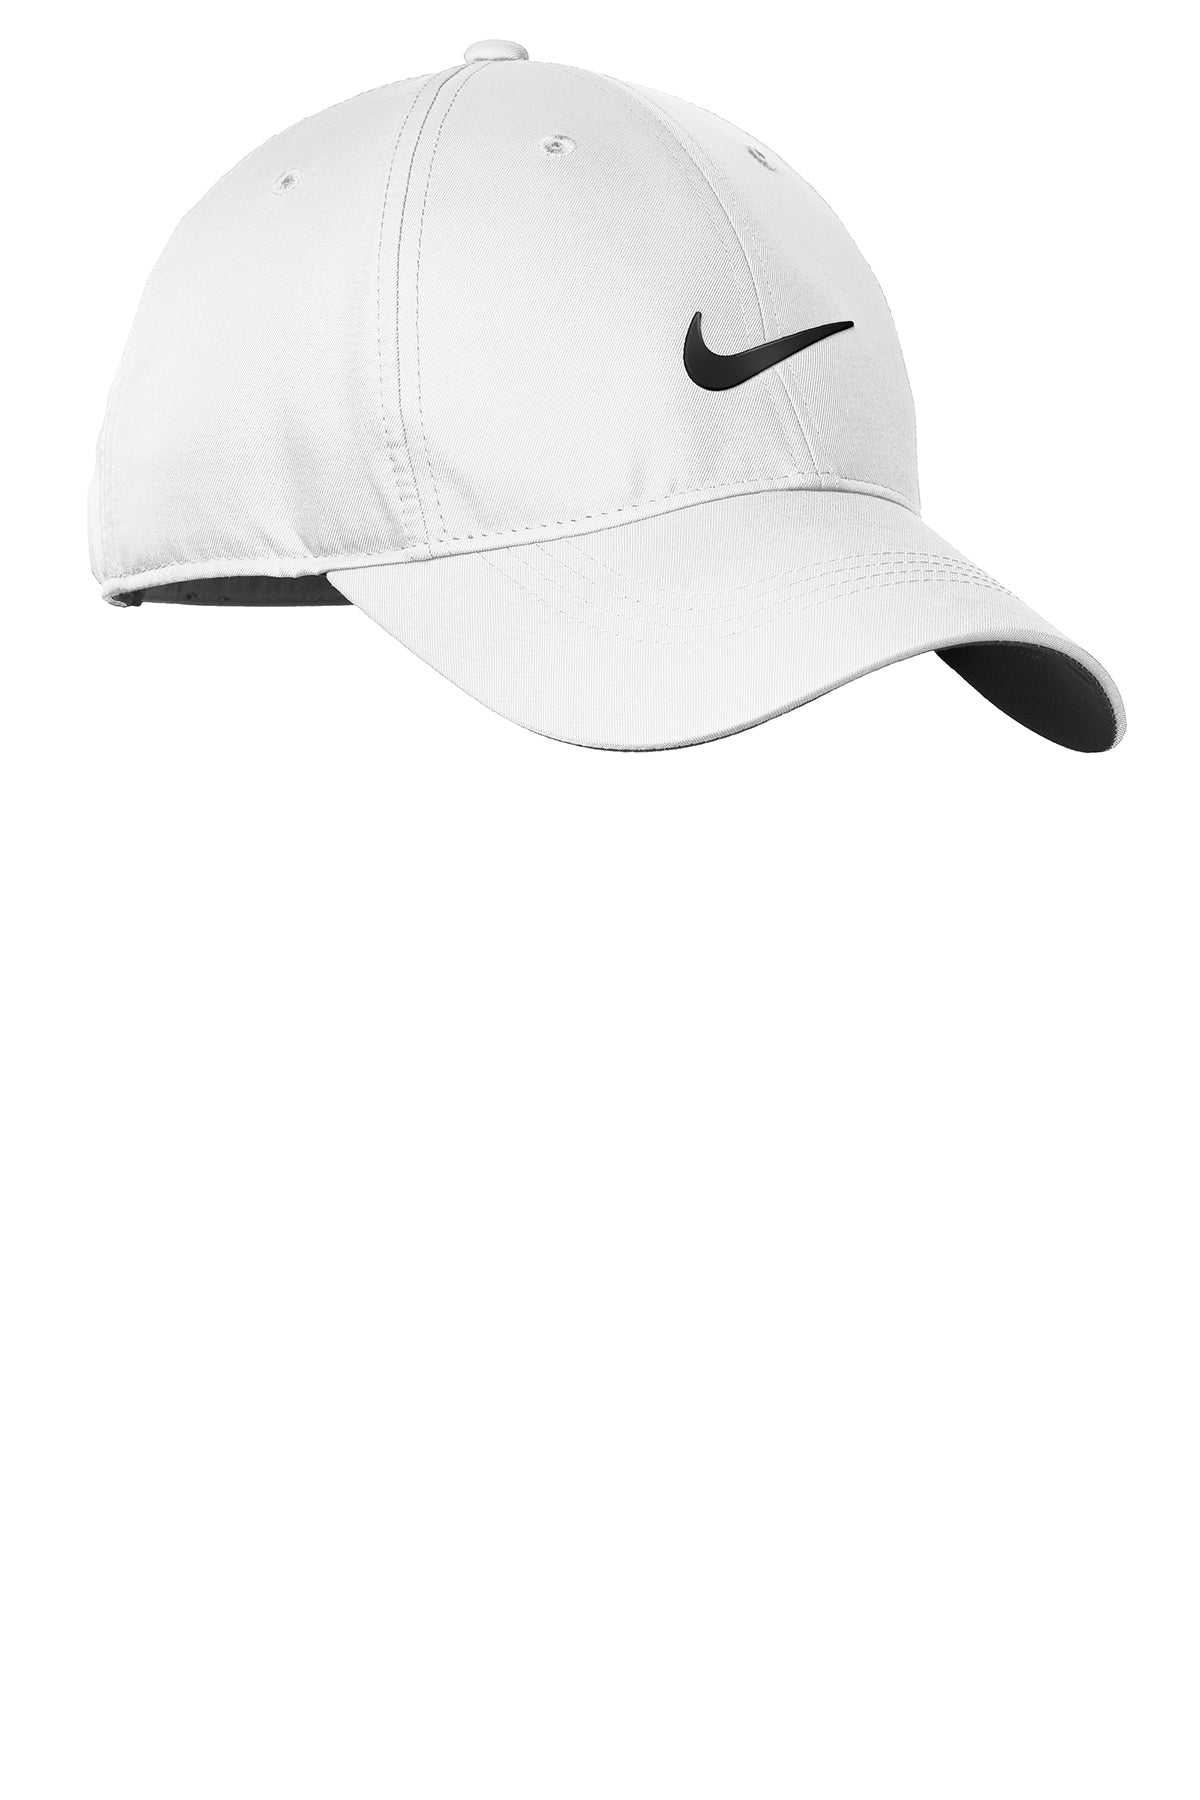 Nike Dri-FIT Swoosh Front Customized Caps, White